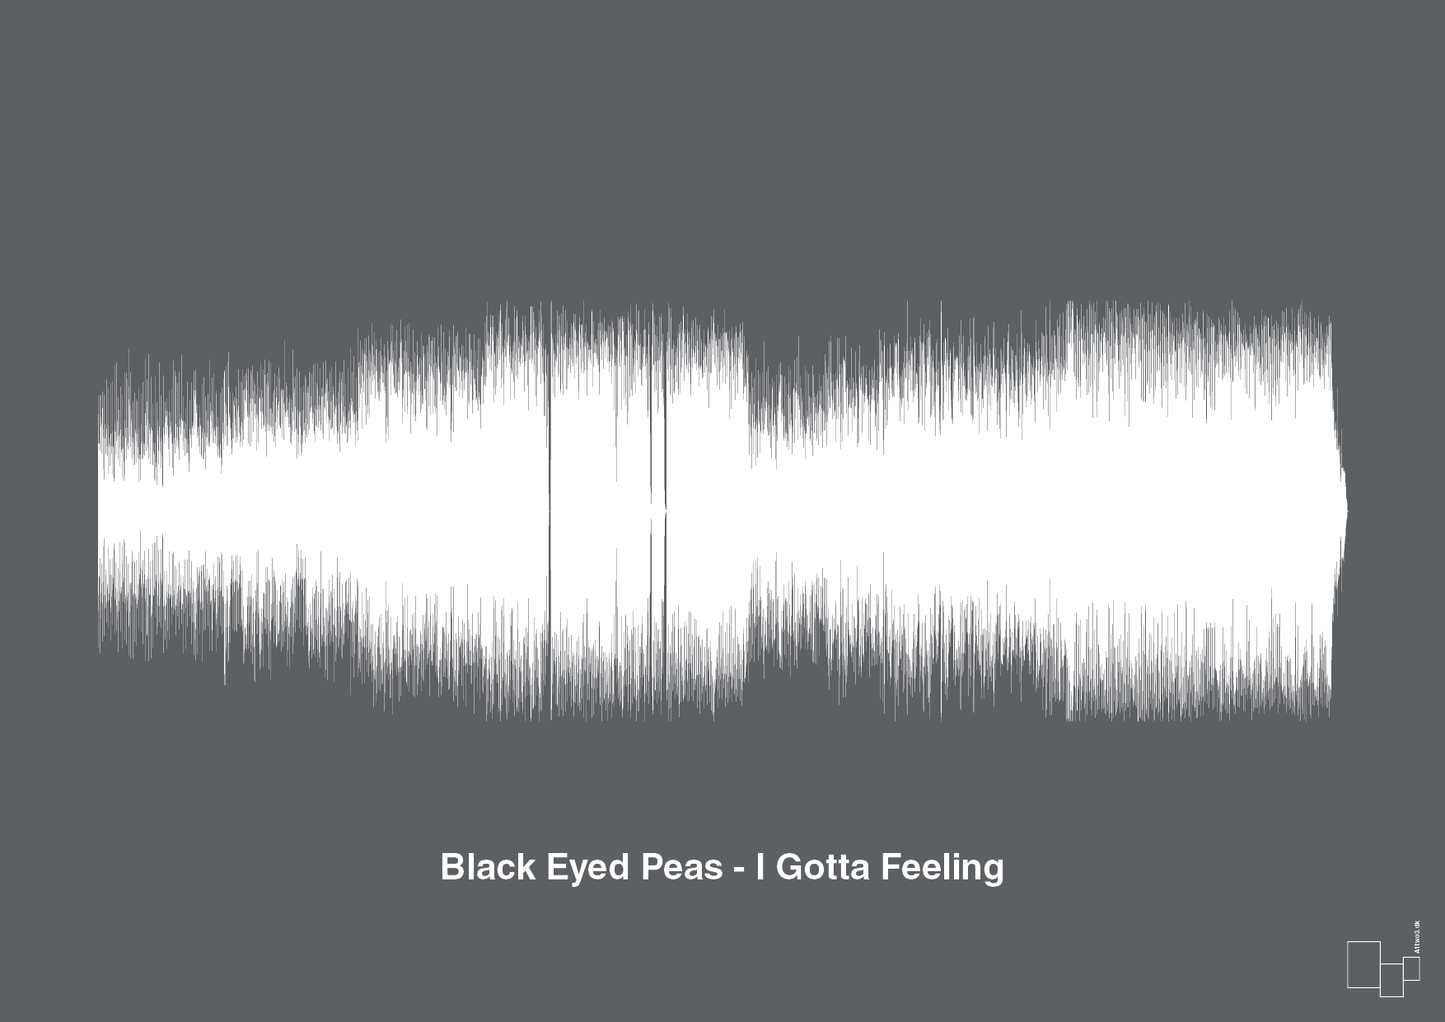 black eyed peas - i gotta feeling - Plakat med Musik i Graphic Charcoal